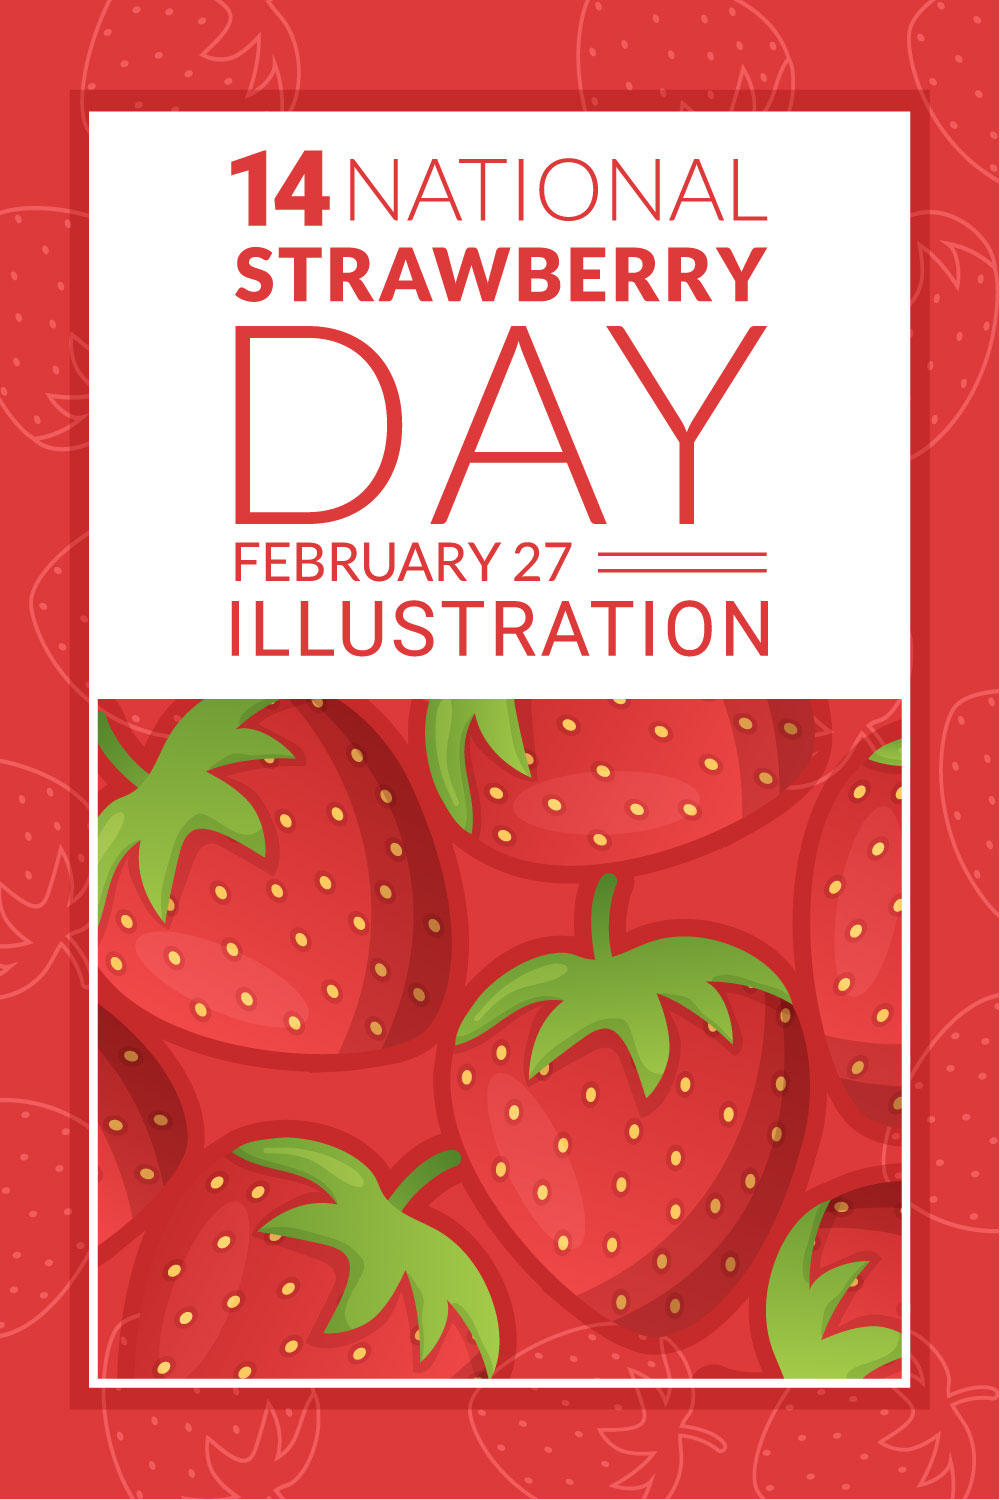 National Strawberry Day Illustration pinterest image.